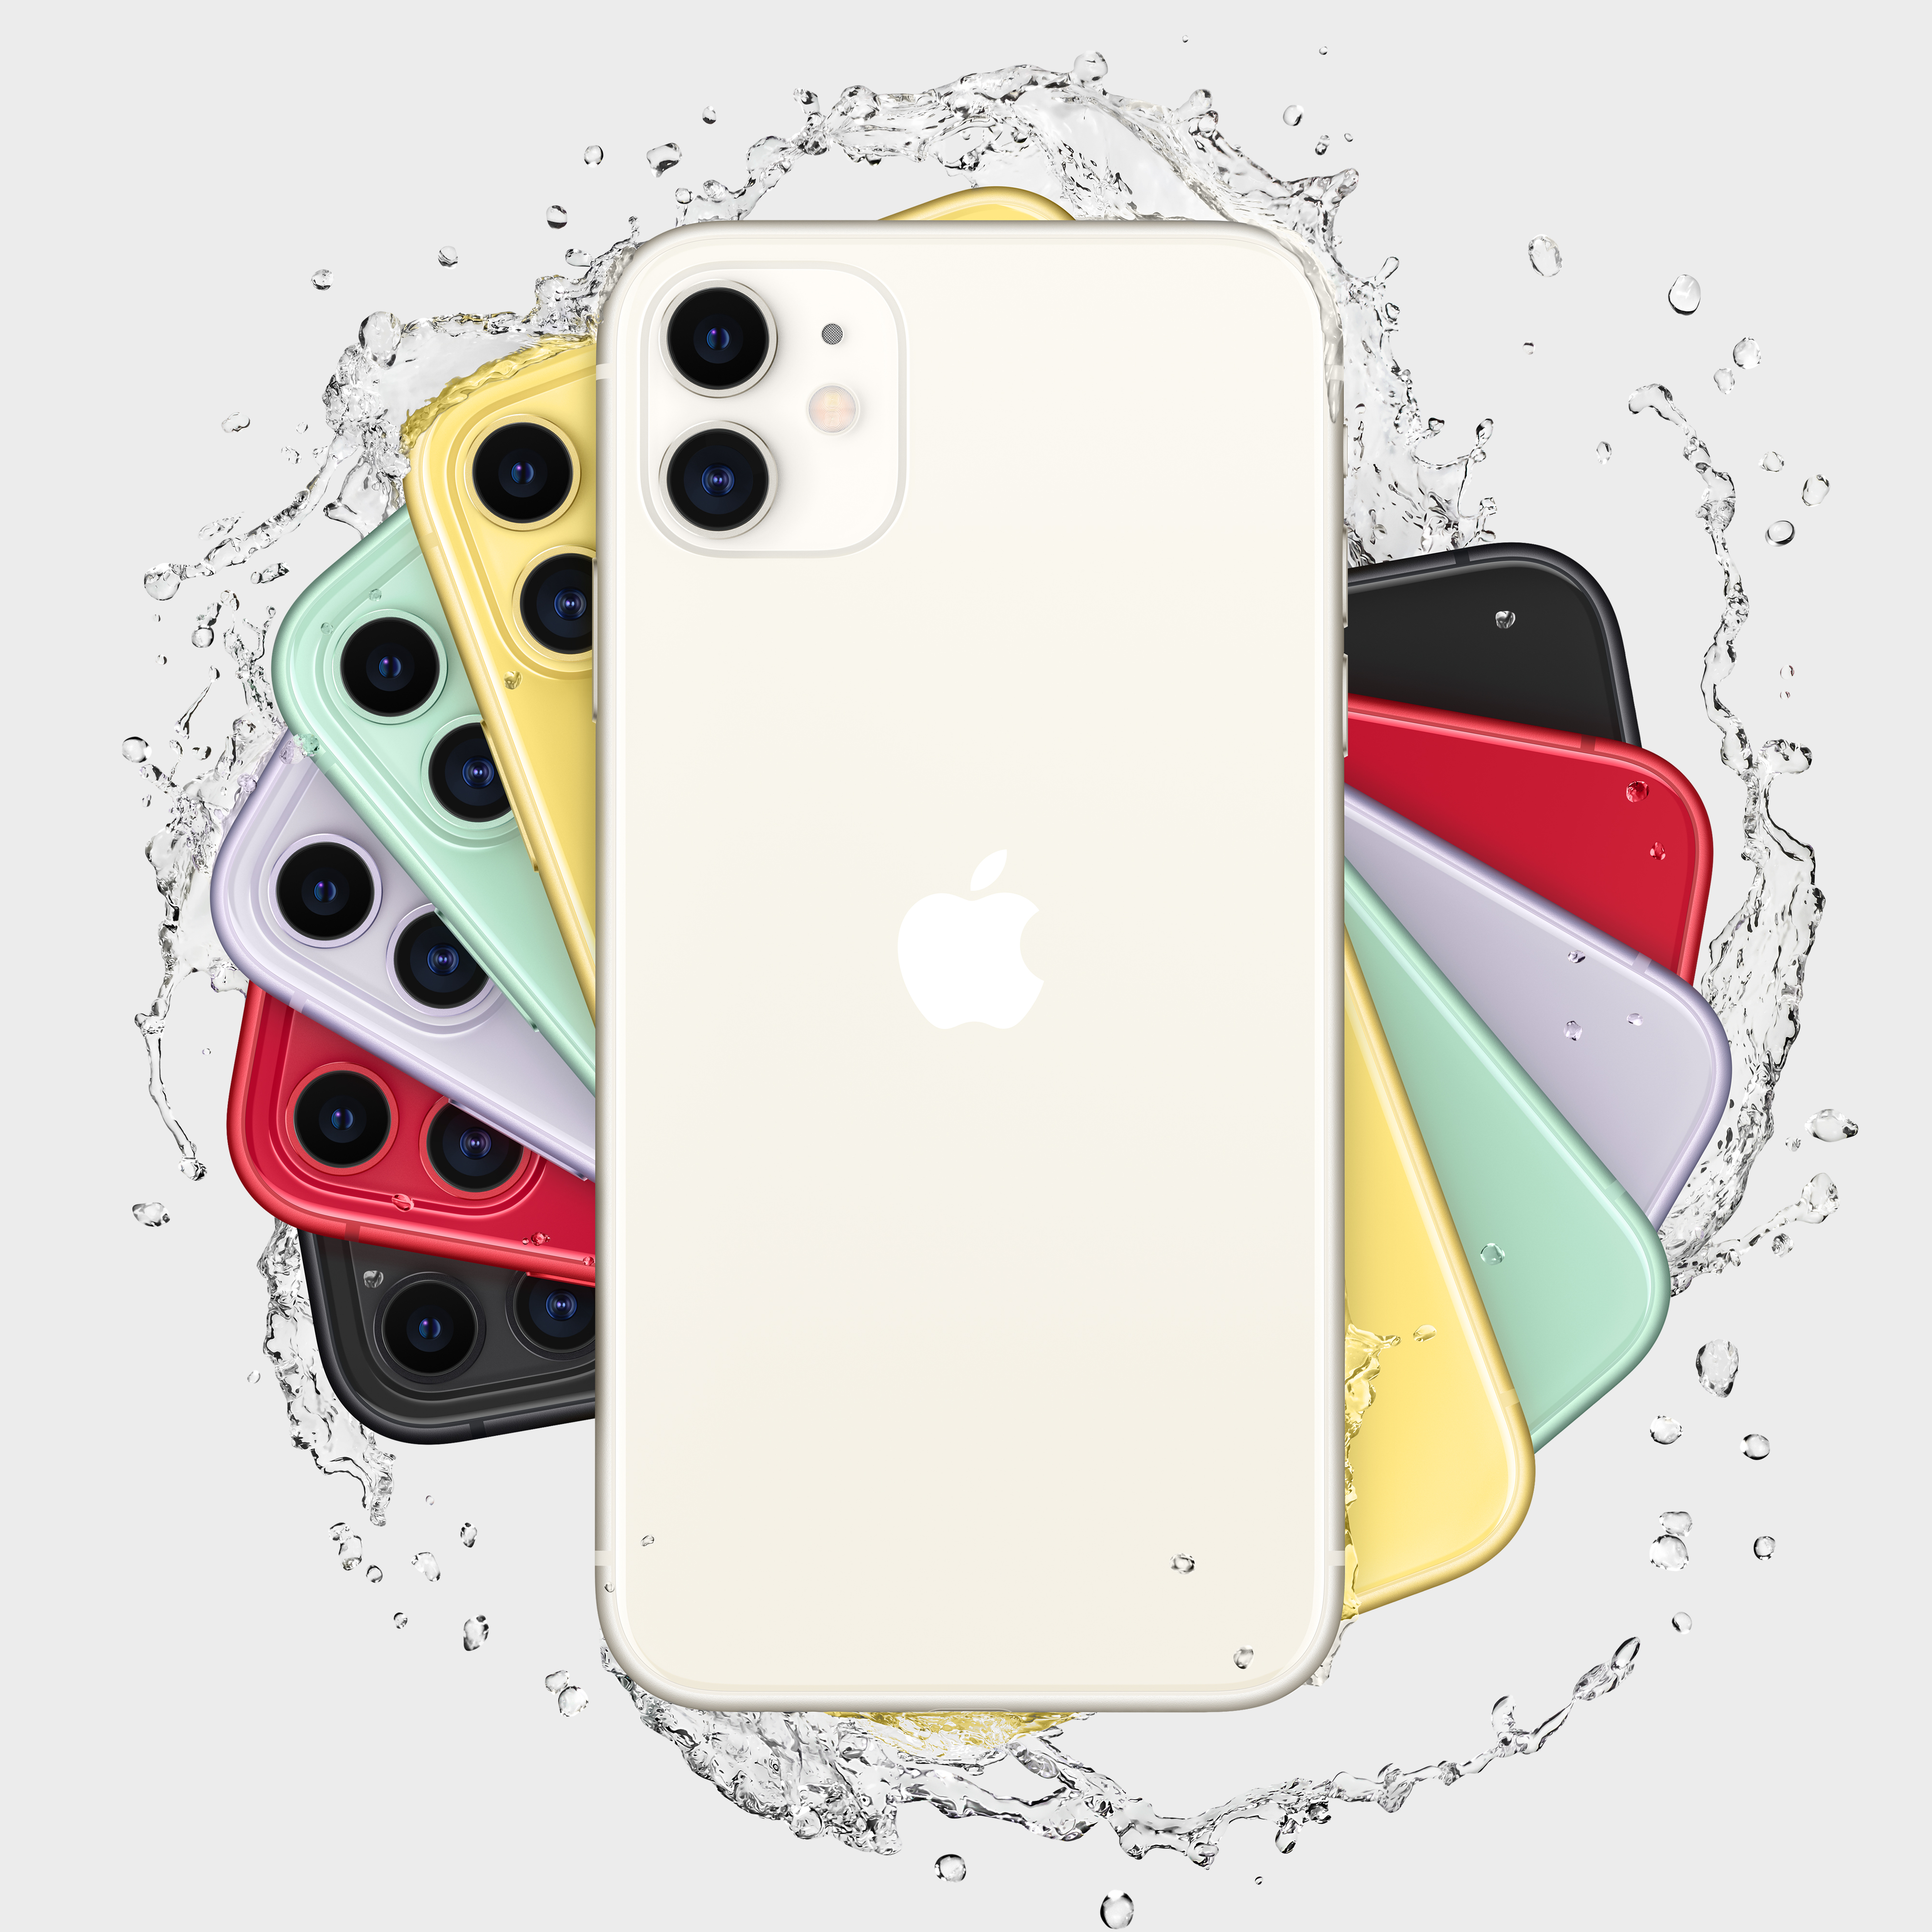 Фото — Apple iPhone 11, 64 ГБ, белый